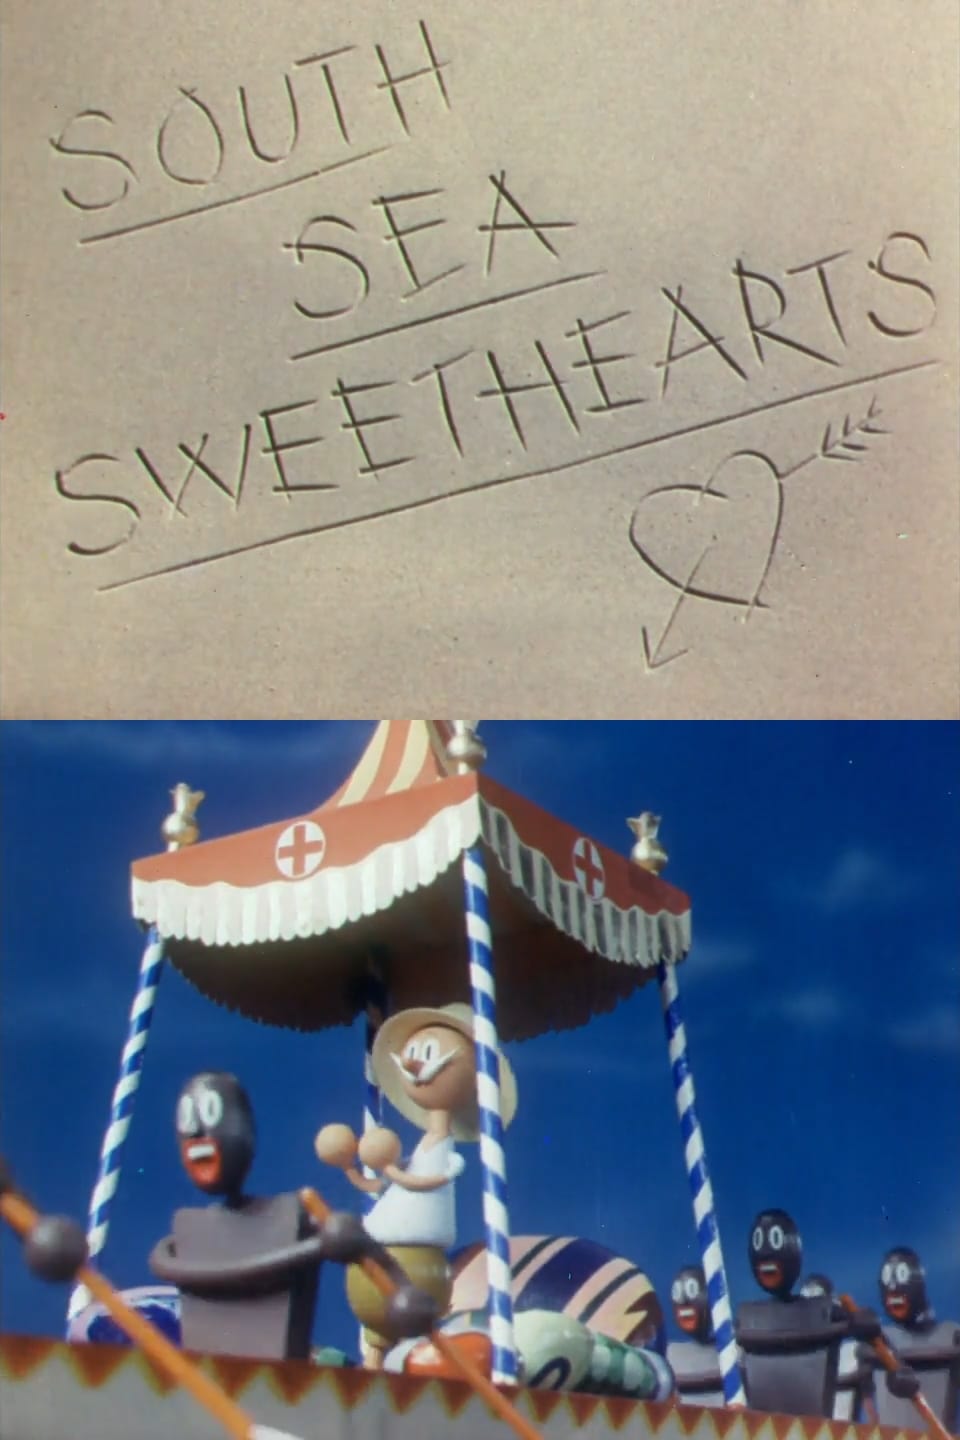 South Sea Sweethearts